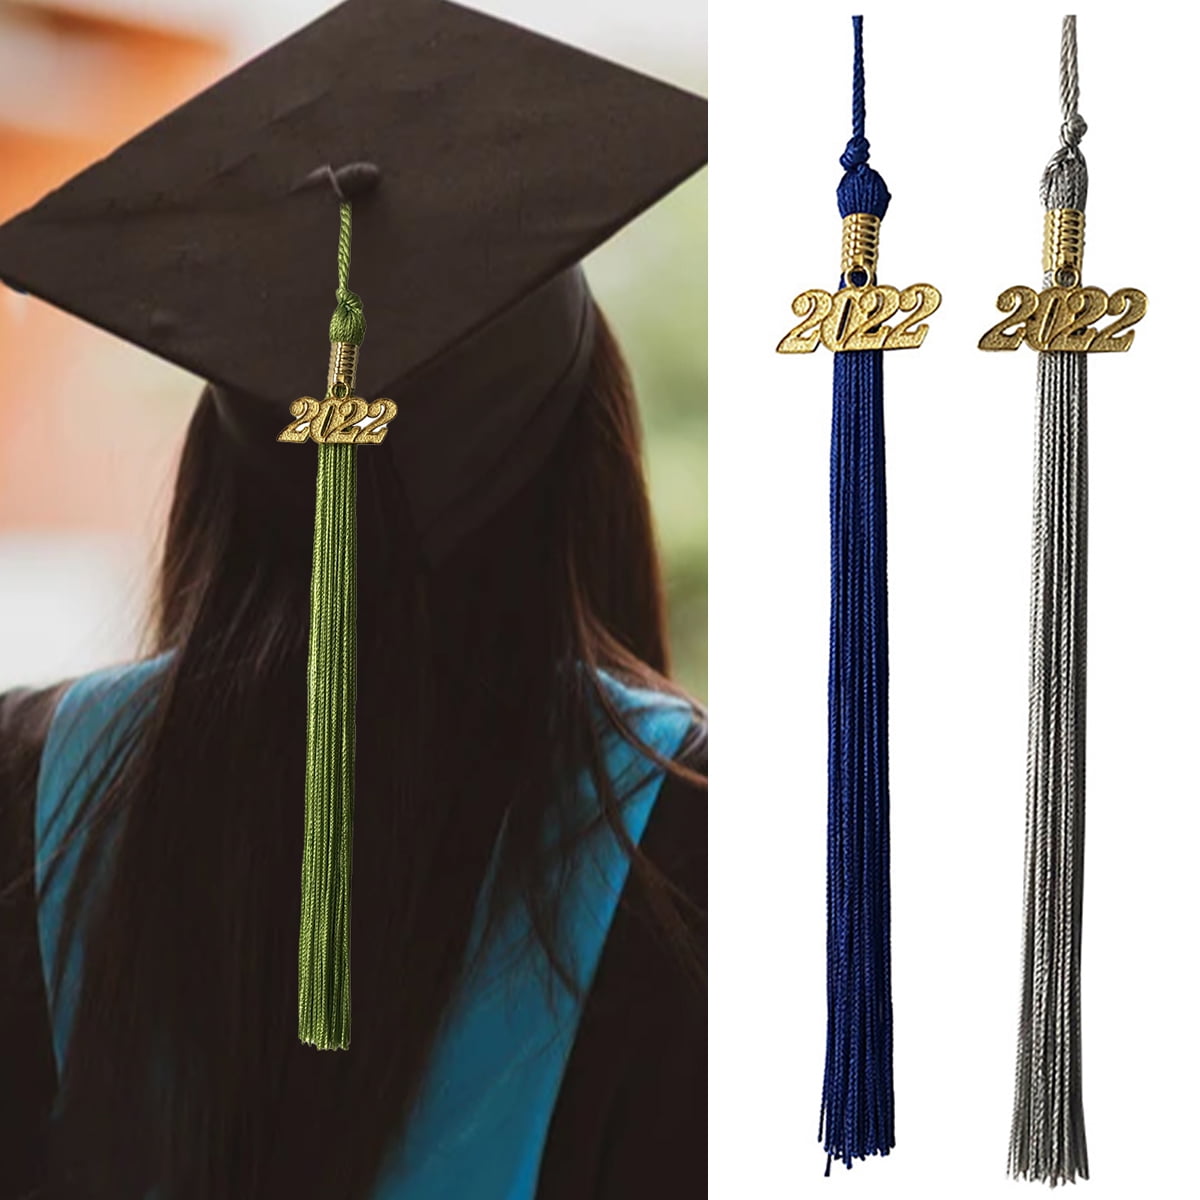 Cheers US Graduation Tassel Academic Graduation Tassel with 2022 Year Charm  Ceremonies Accessories for Graduate Caps Hats Parties Ceremonies Souvenir  Gifts